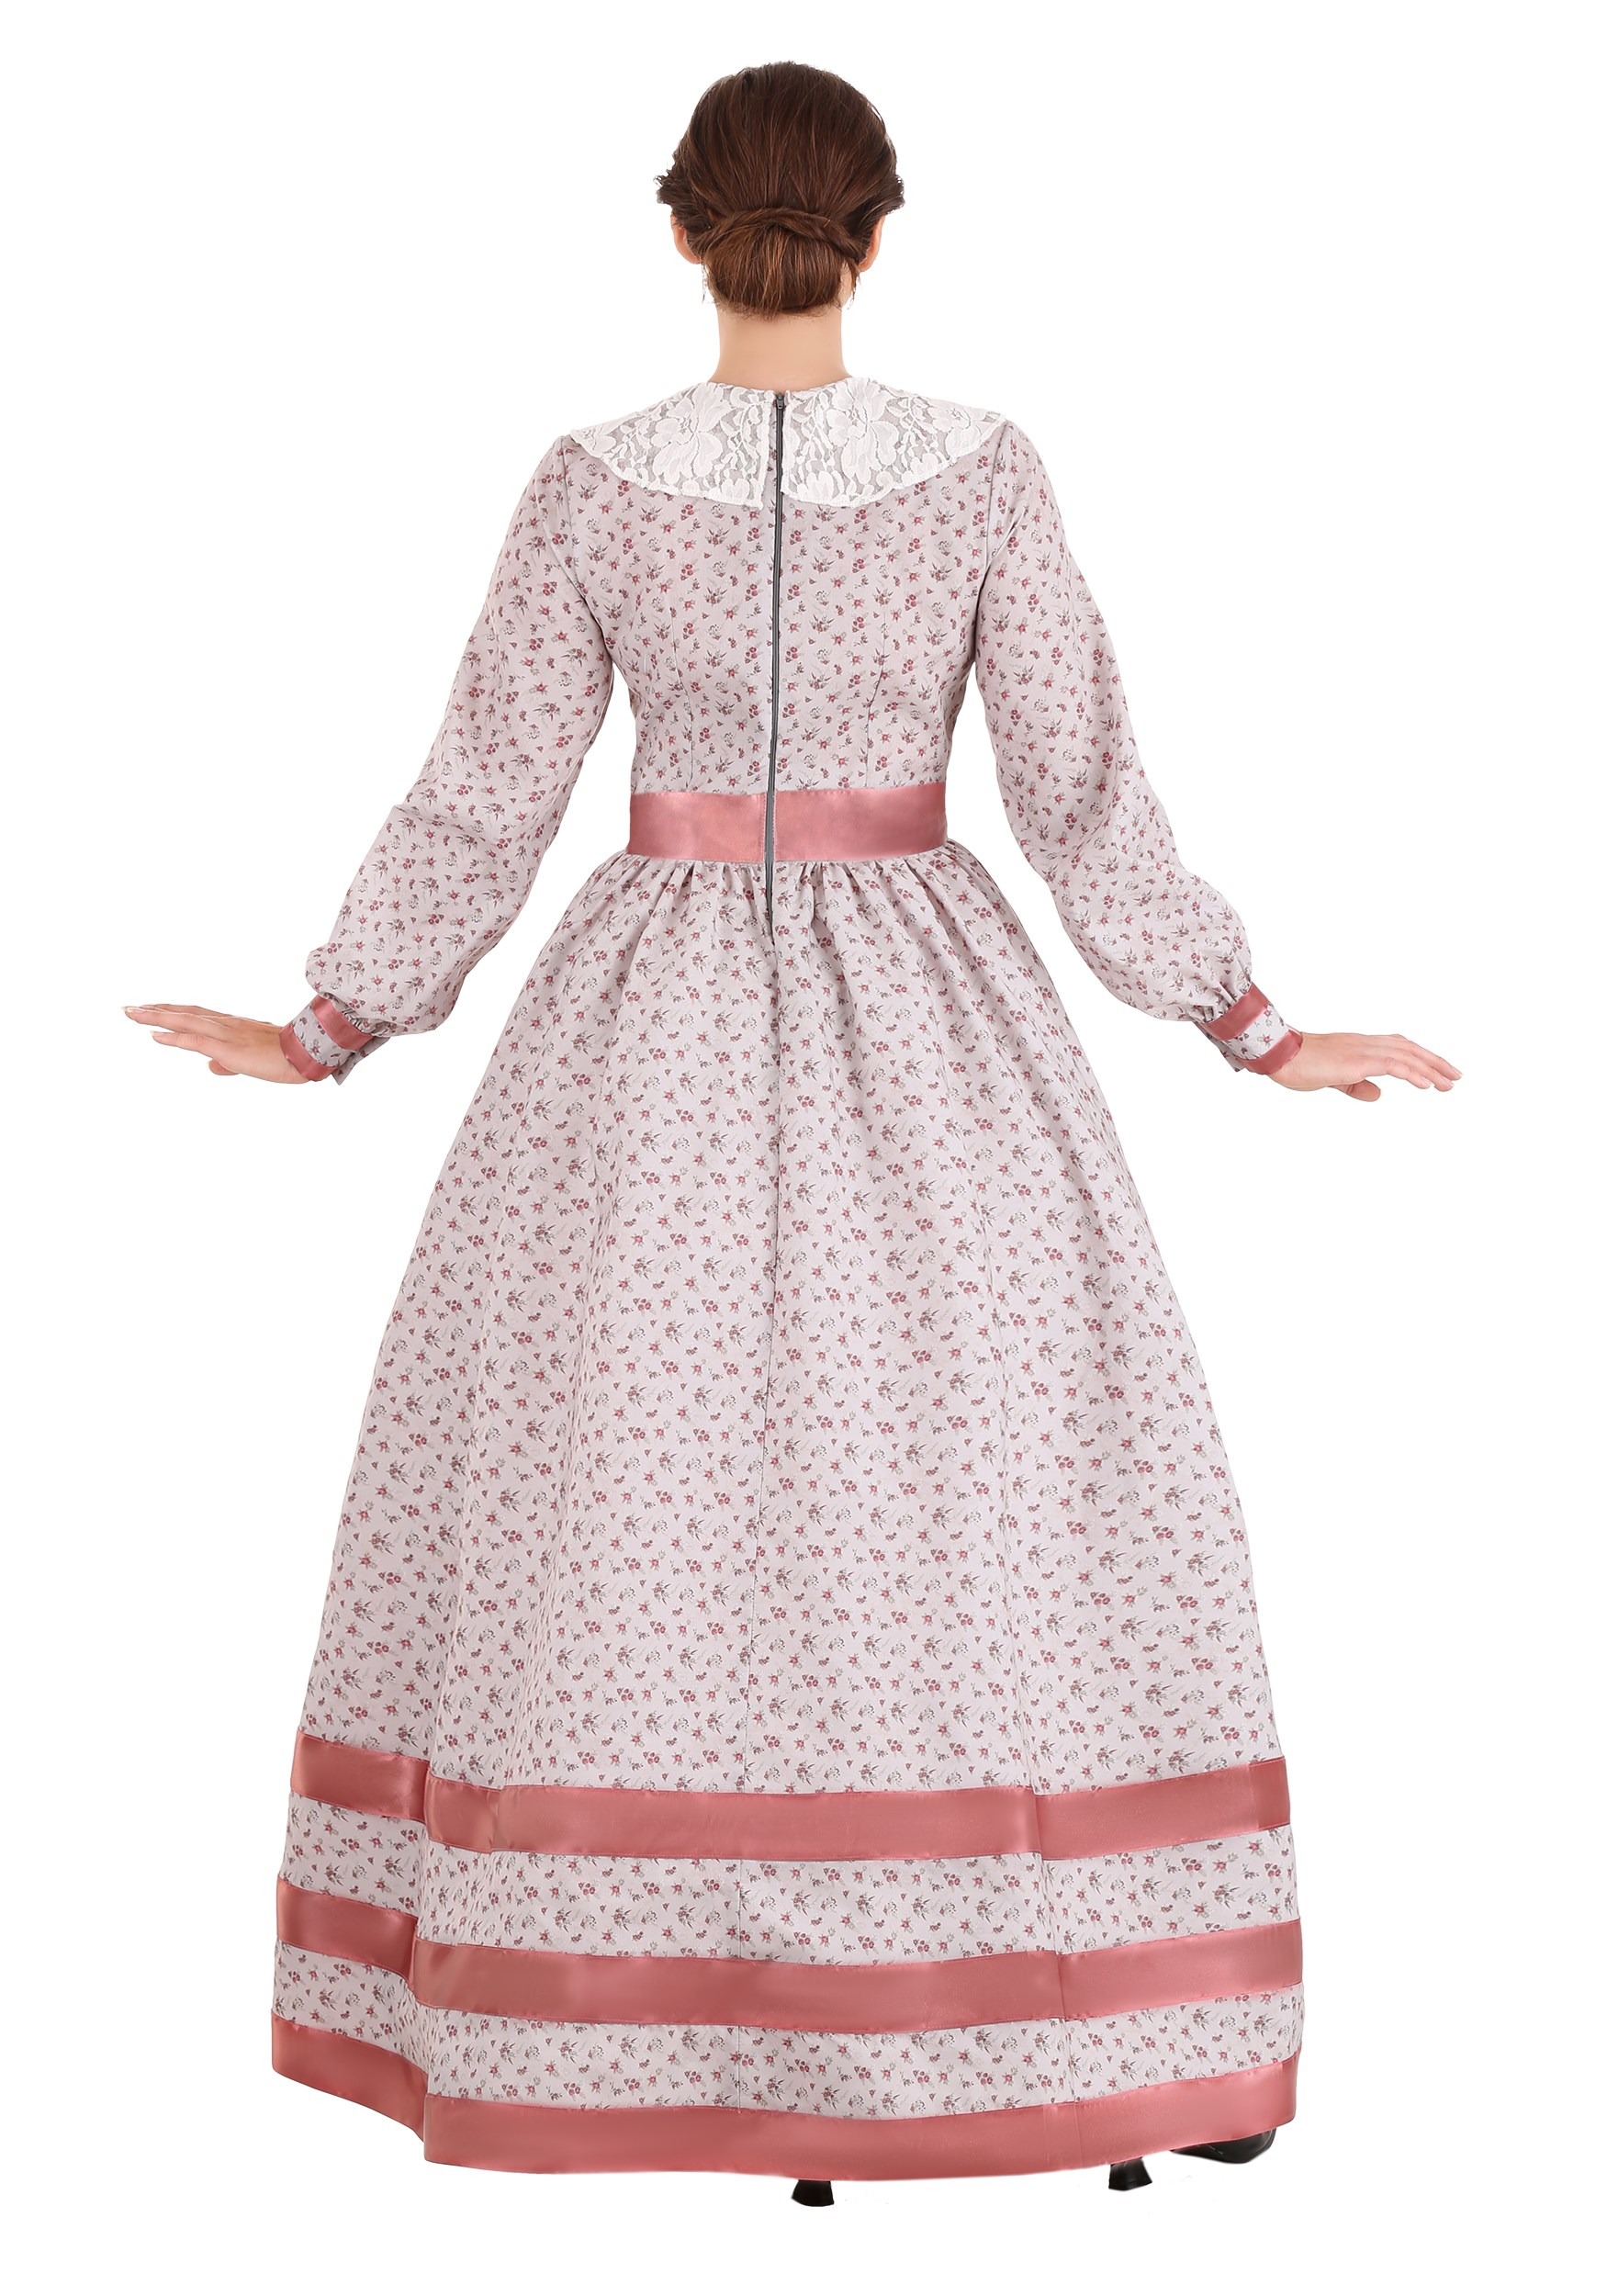 Civil War Dress Costume For Women